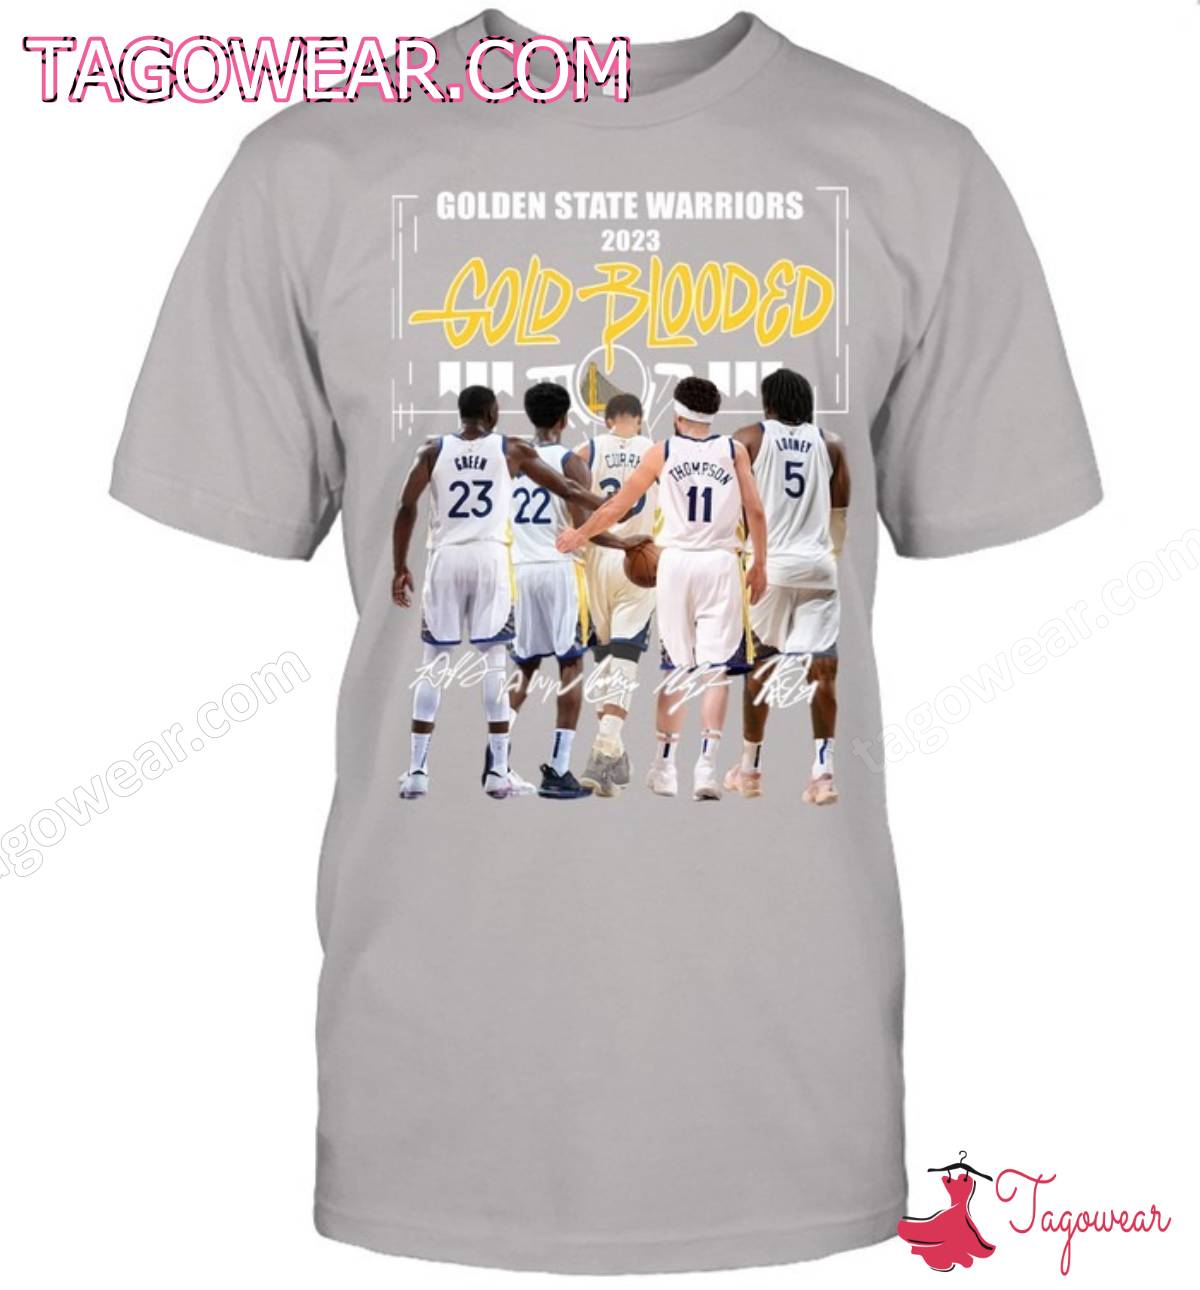 Golden State Warriors 2023 Gold Blooded Shirt, Tank Top